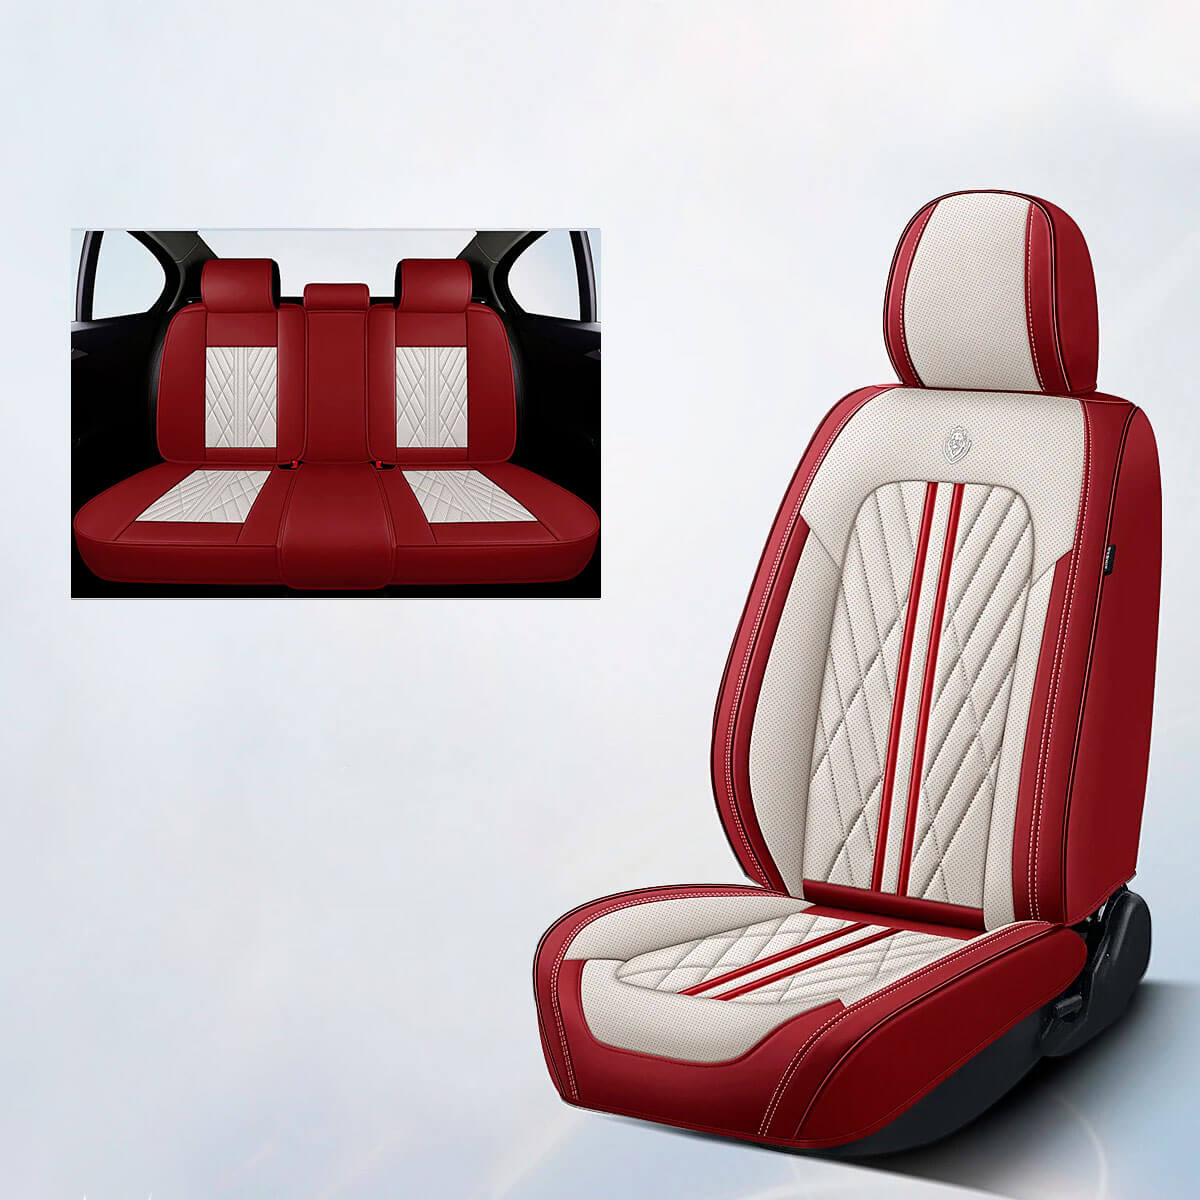 Custom Luxury Leather Car Seat Covers